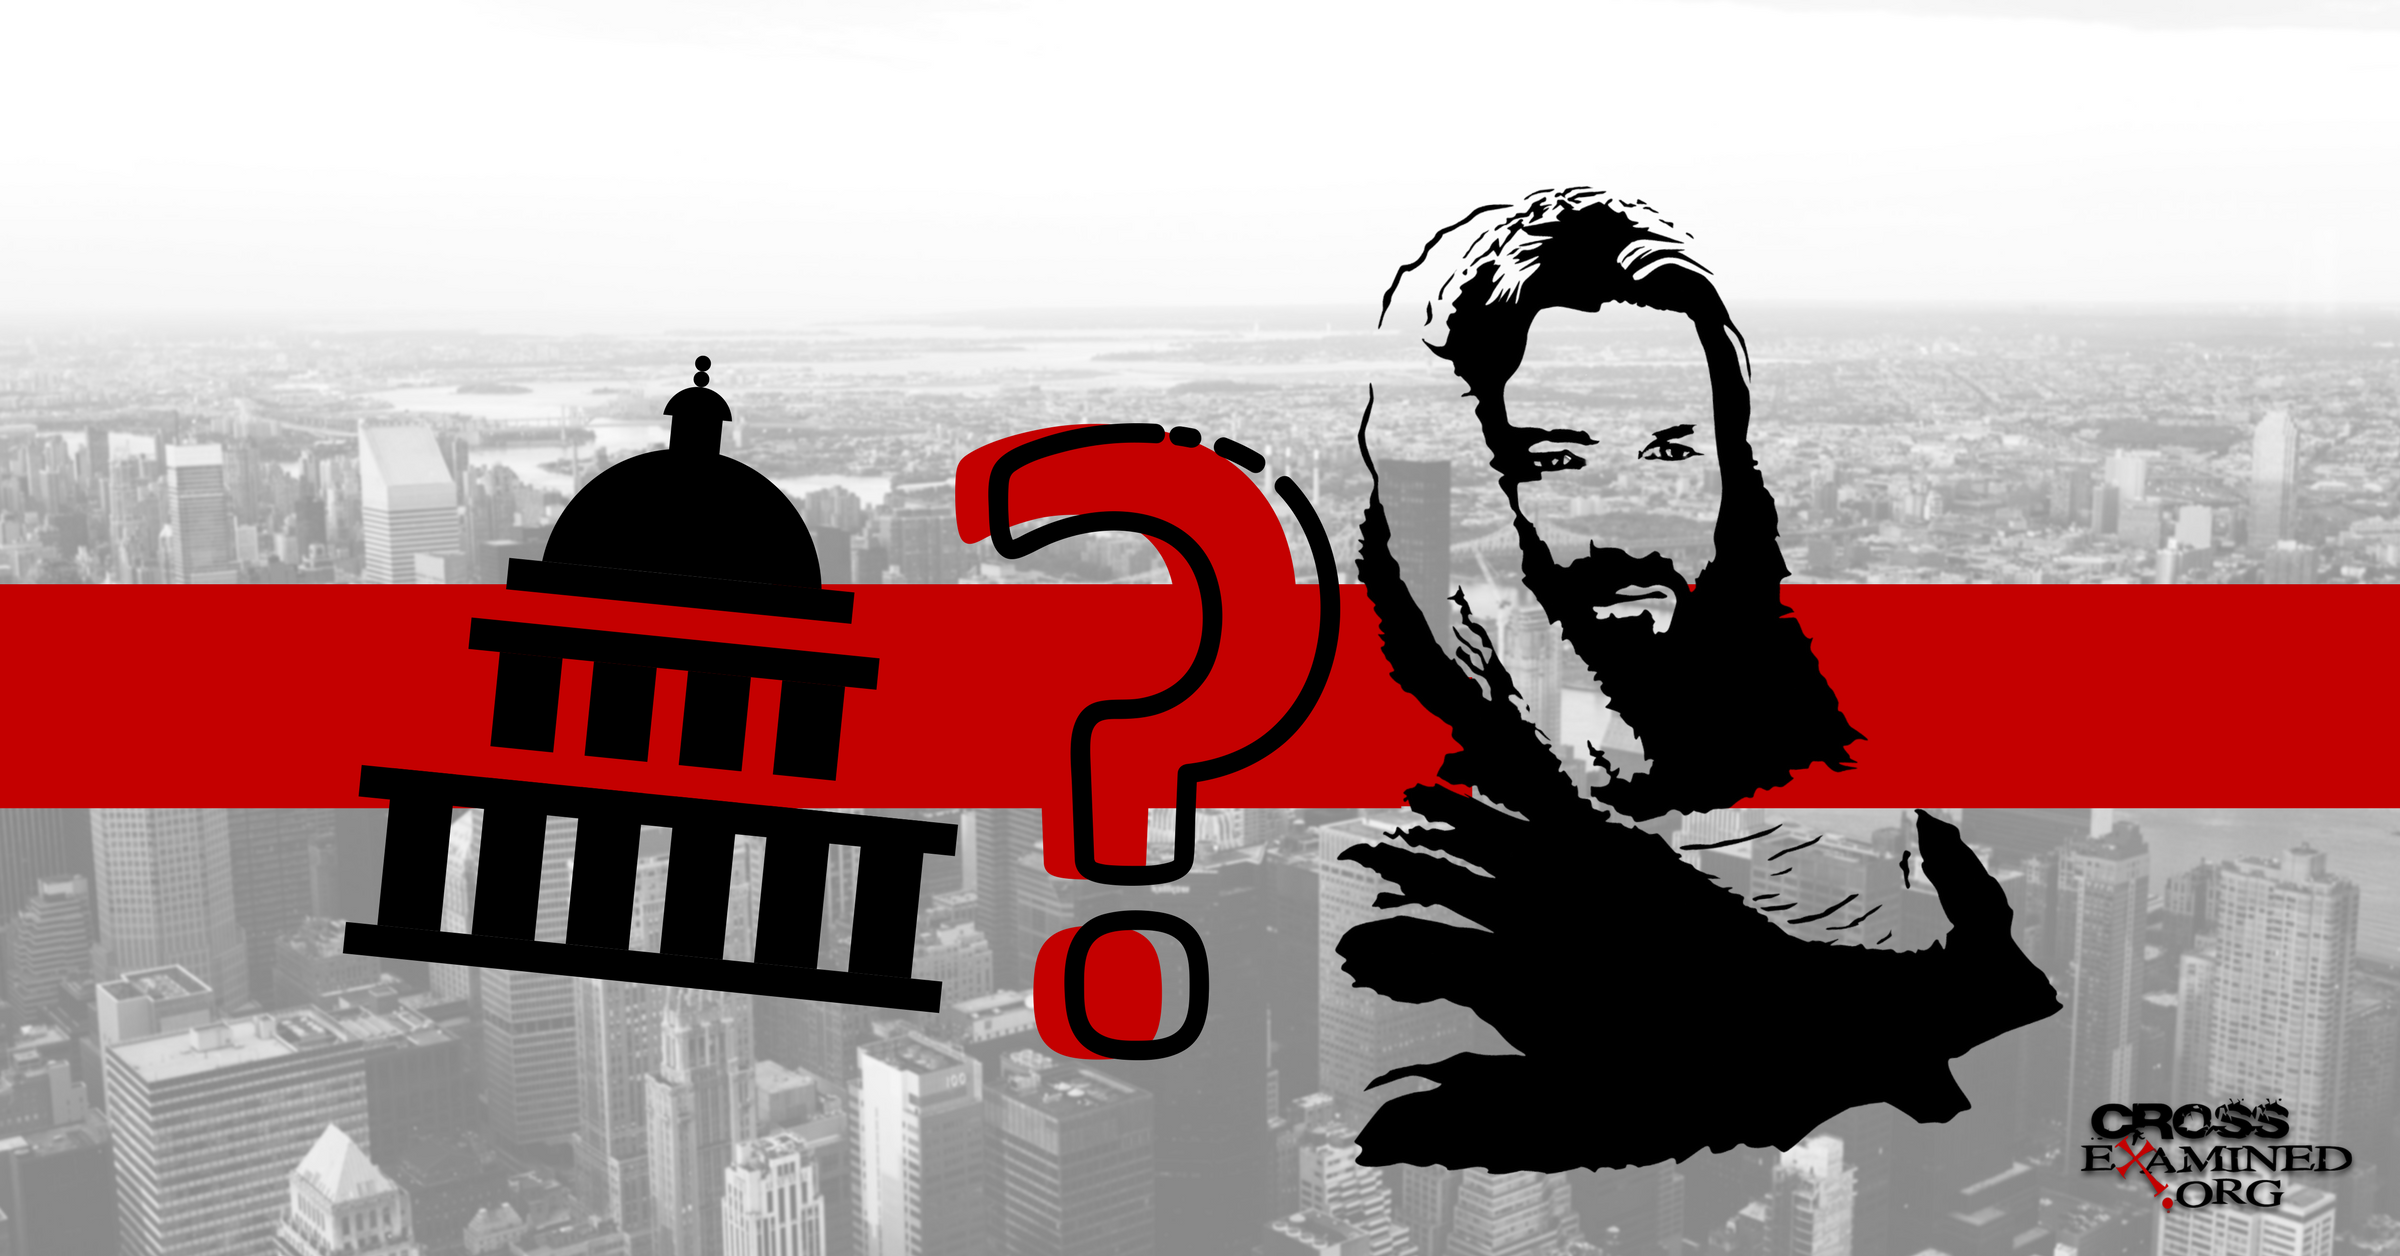 Would Jesus Participate in Politics?